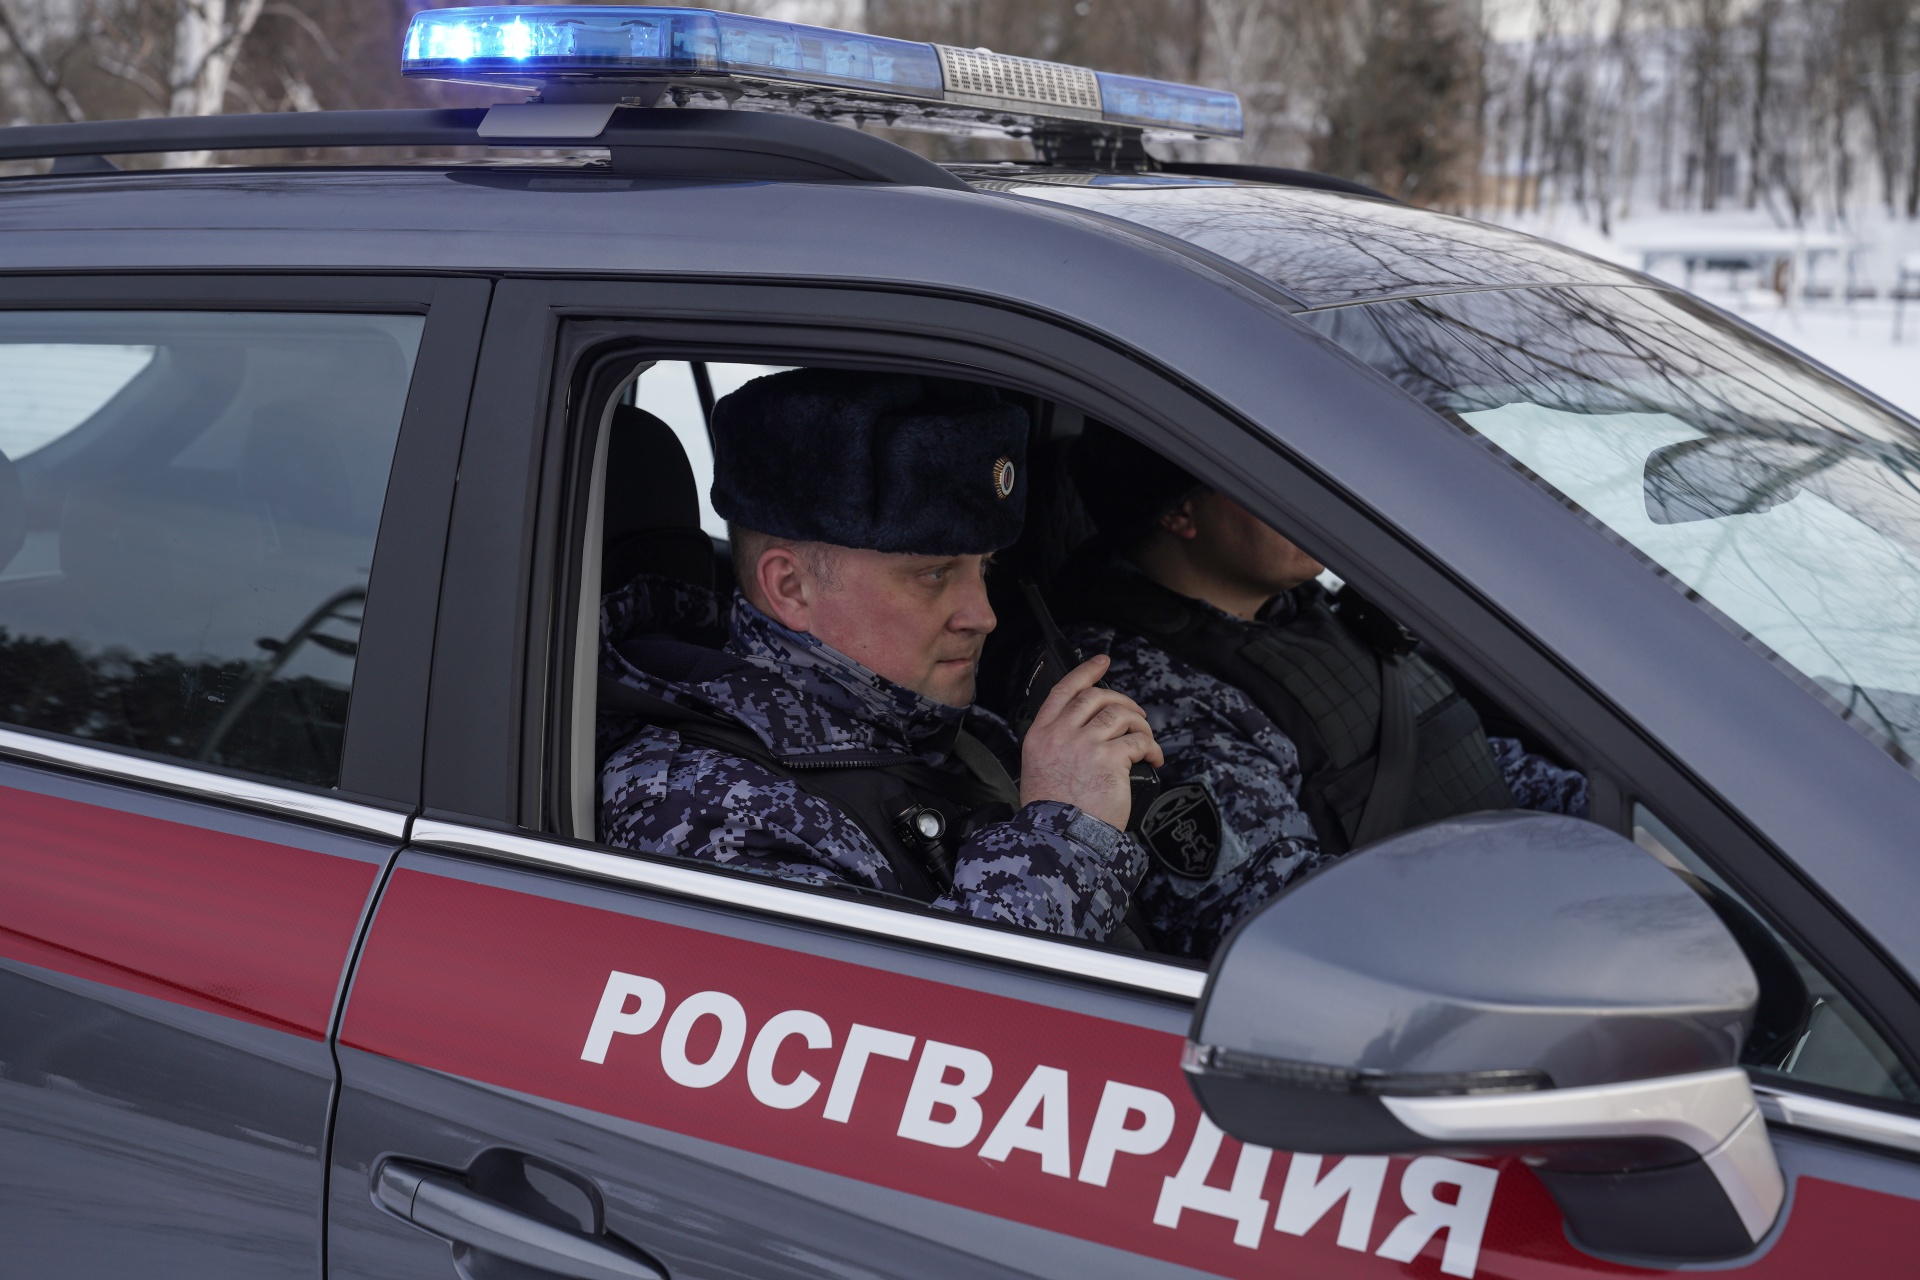 Закладчика амфетамина задержали сотрудники Росгвардии в Москве 